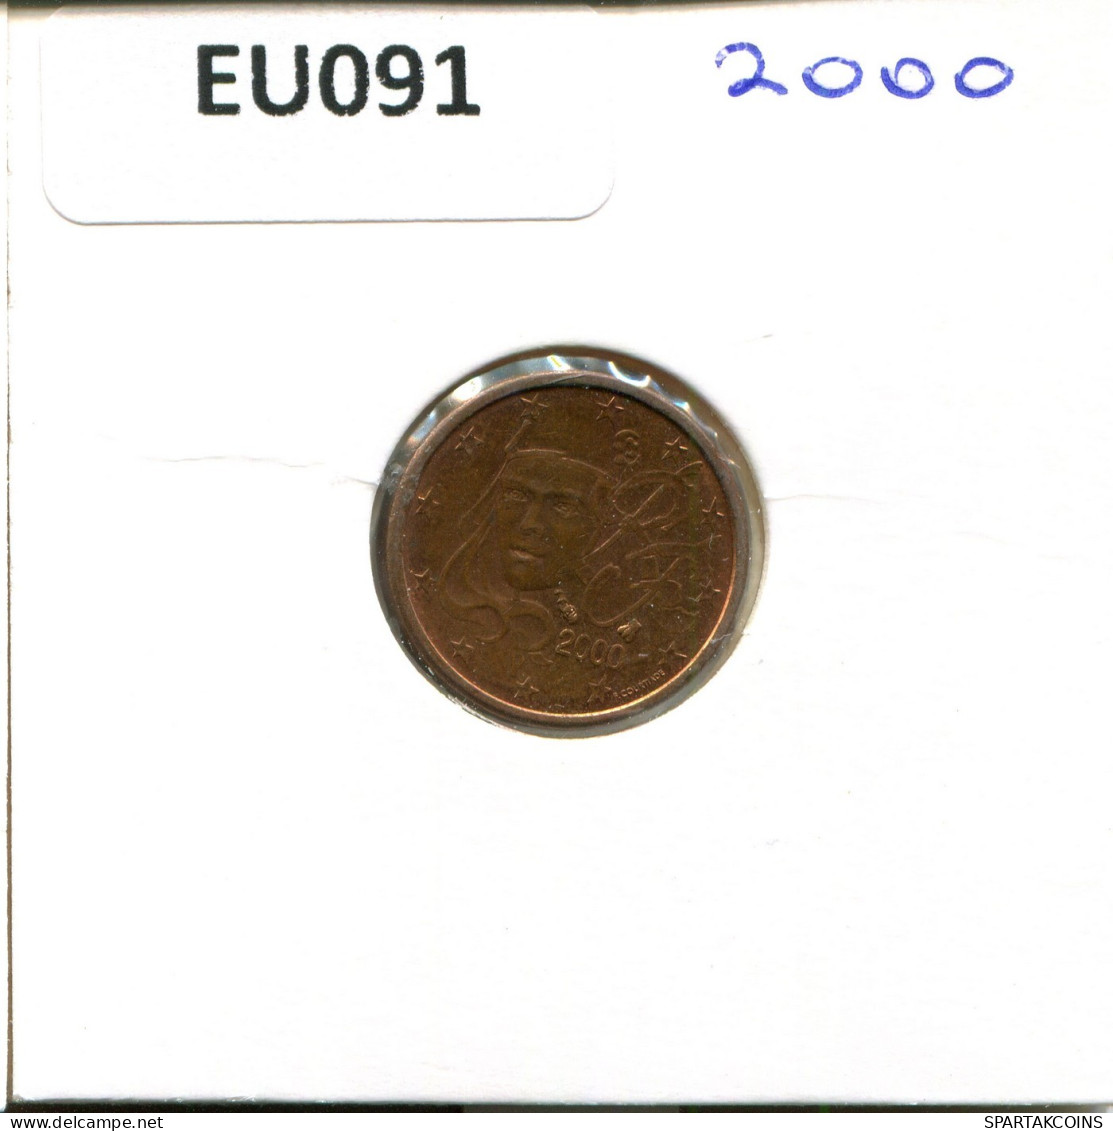 1 EURO CENT 2000 FRANKREICH FRANCE Französisch Münze #EU091.D.A - Frankreich